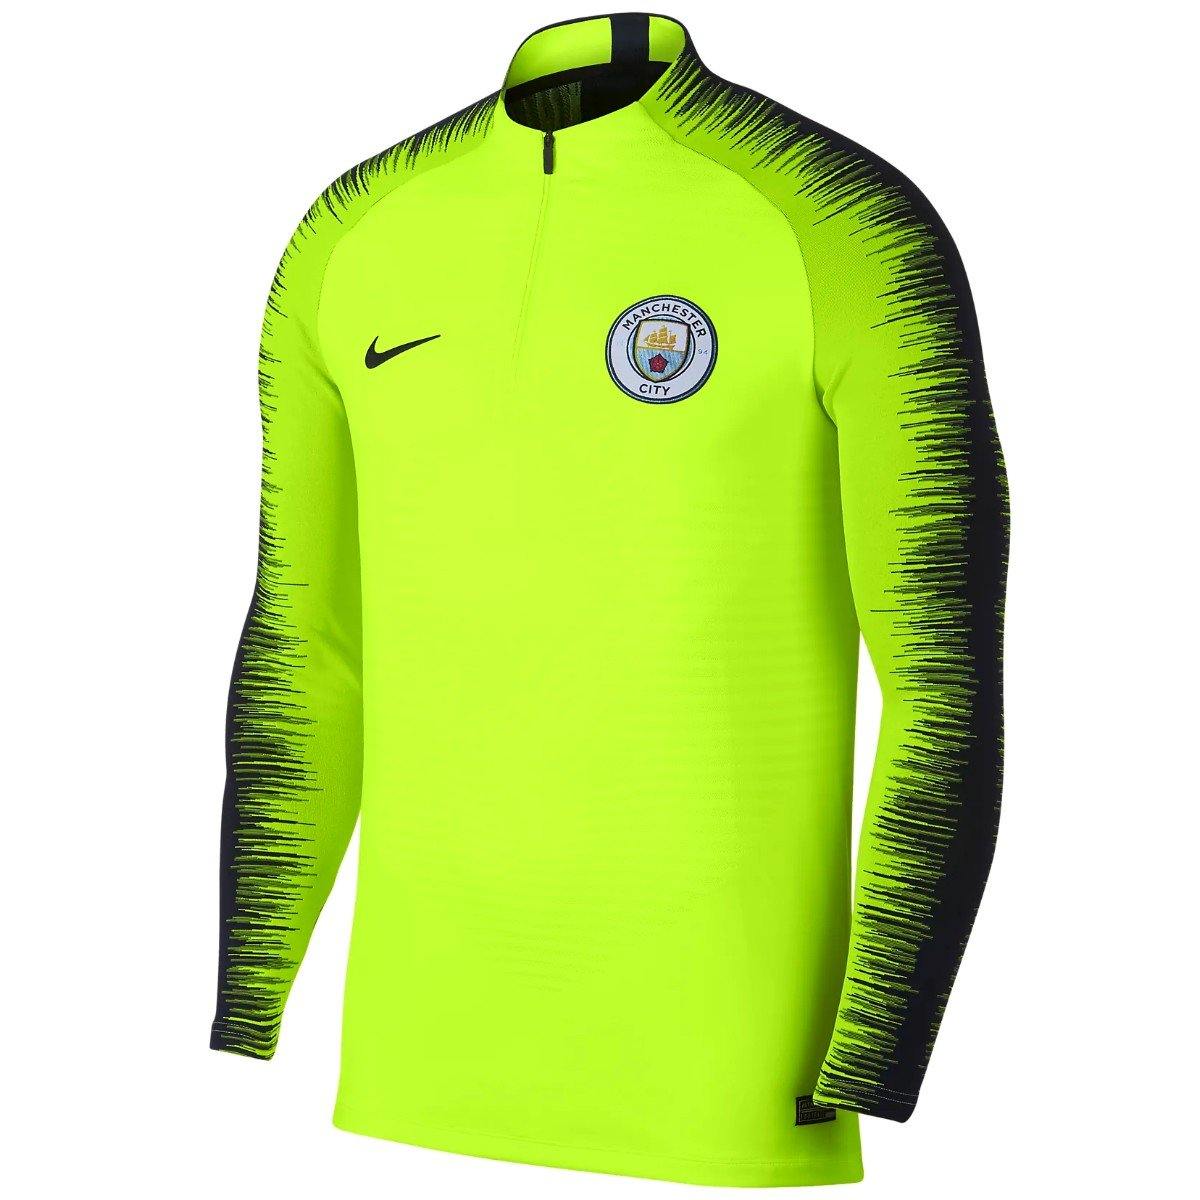 Koning Lear Defecte sticker Manchester City FC fluo Vaporknit Technical training top 2019 - Nike –  SoccerTracksuits.com